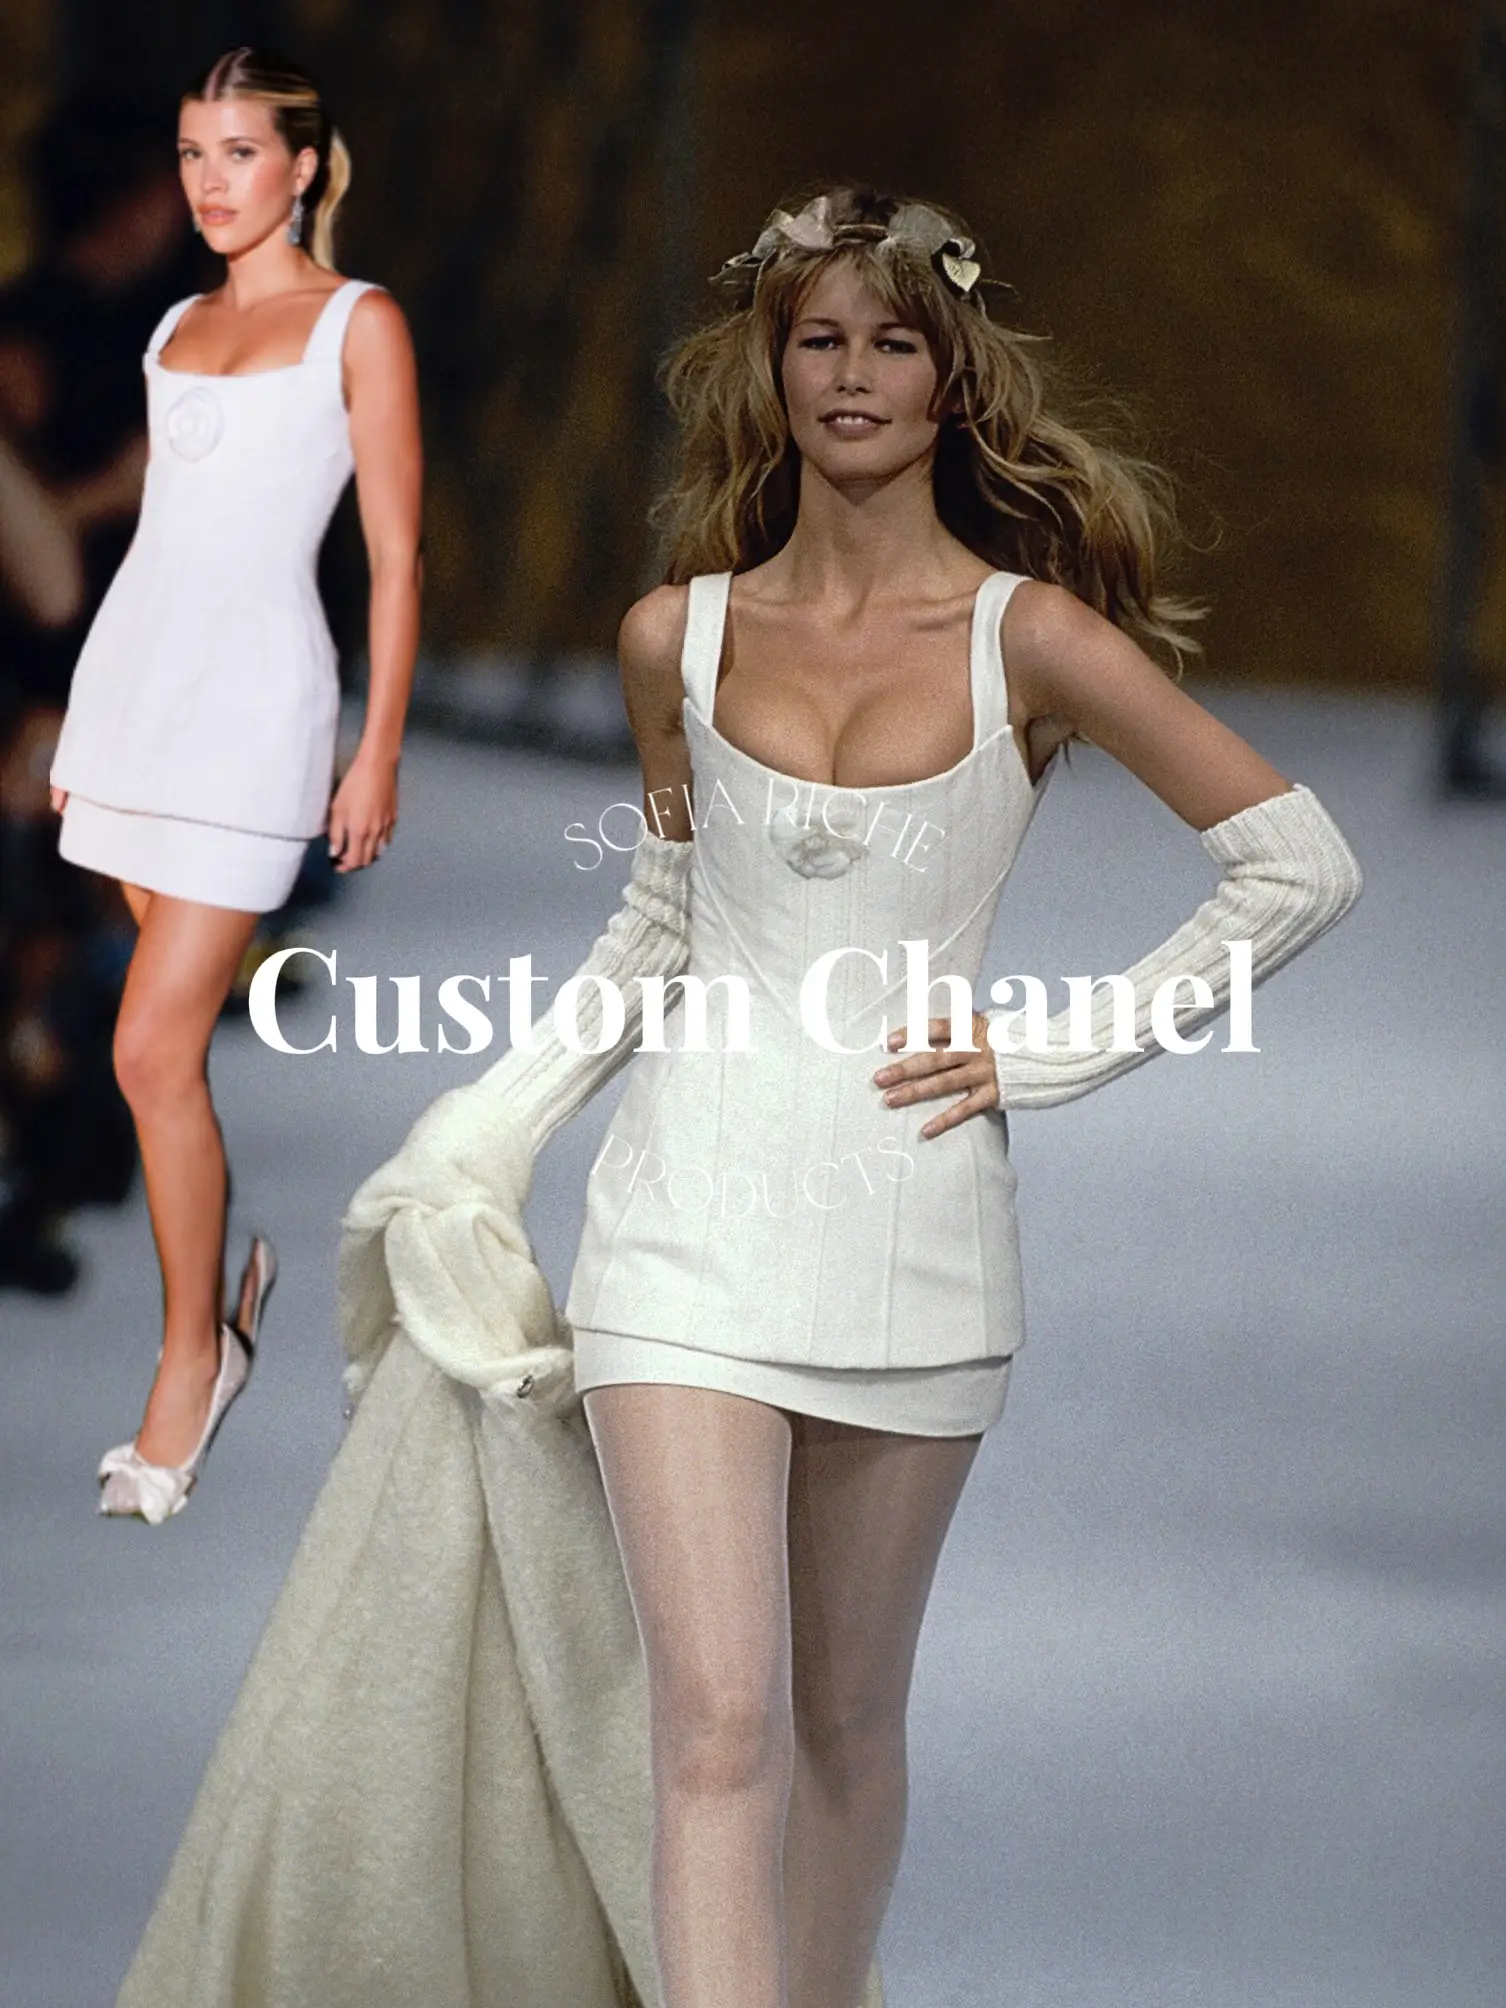 Sofia Richie wore three custom Chanel wedding dresses